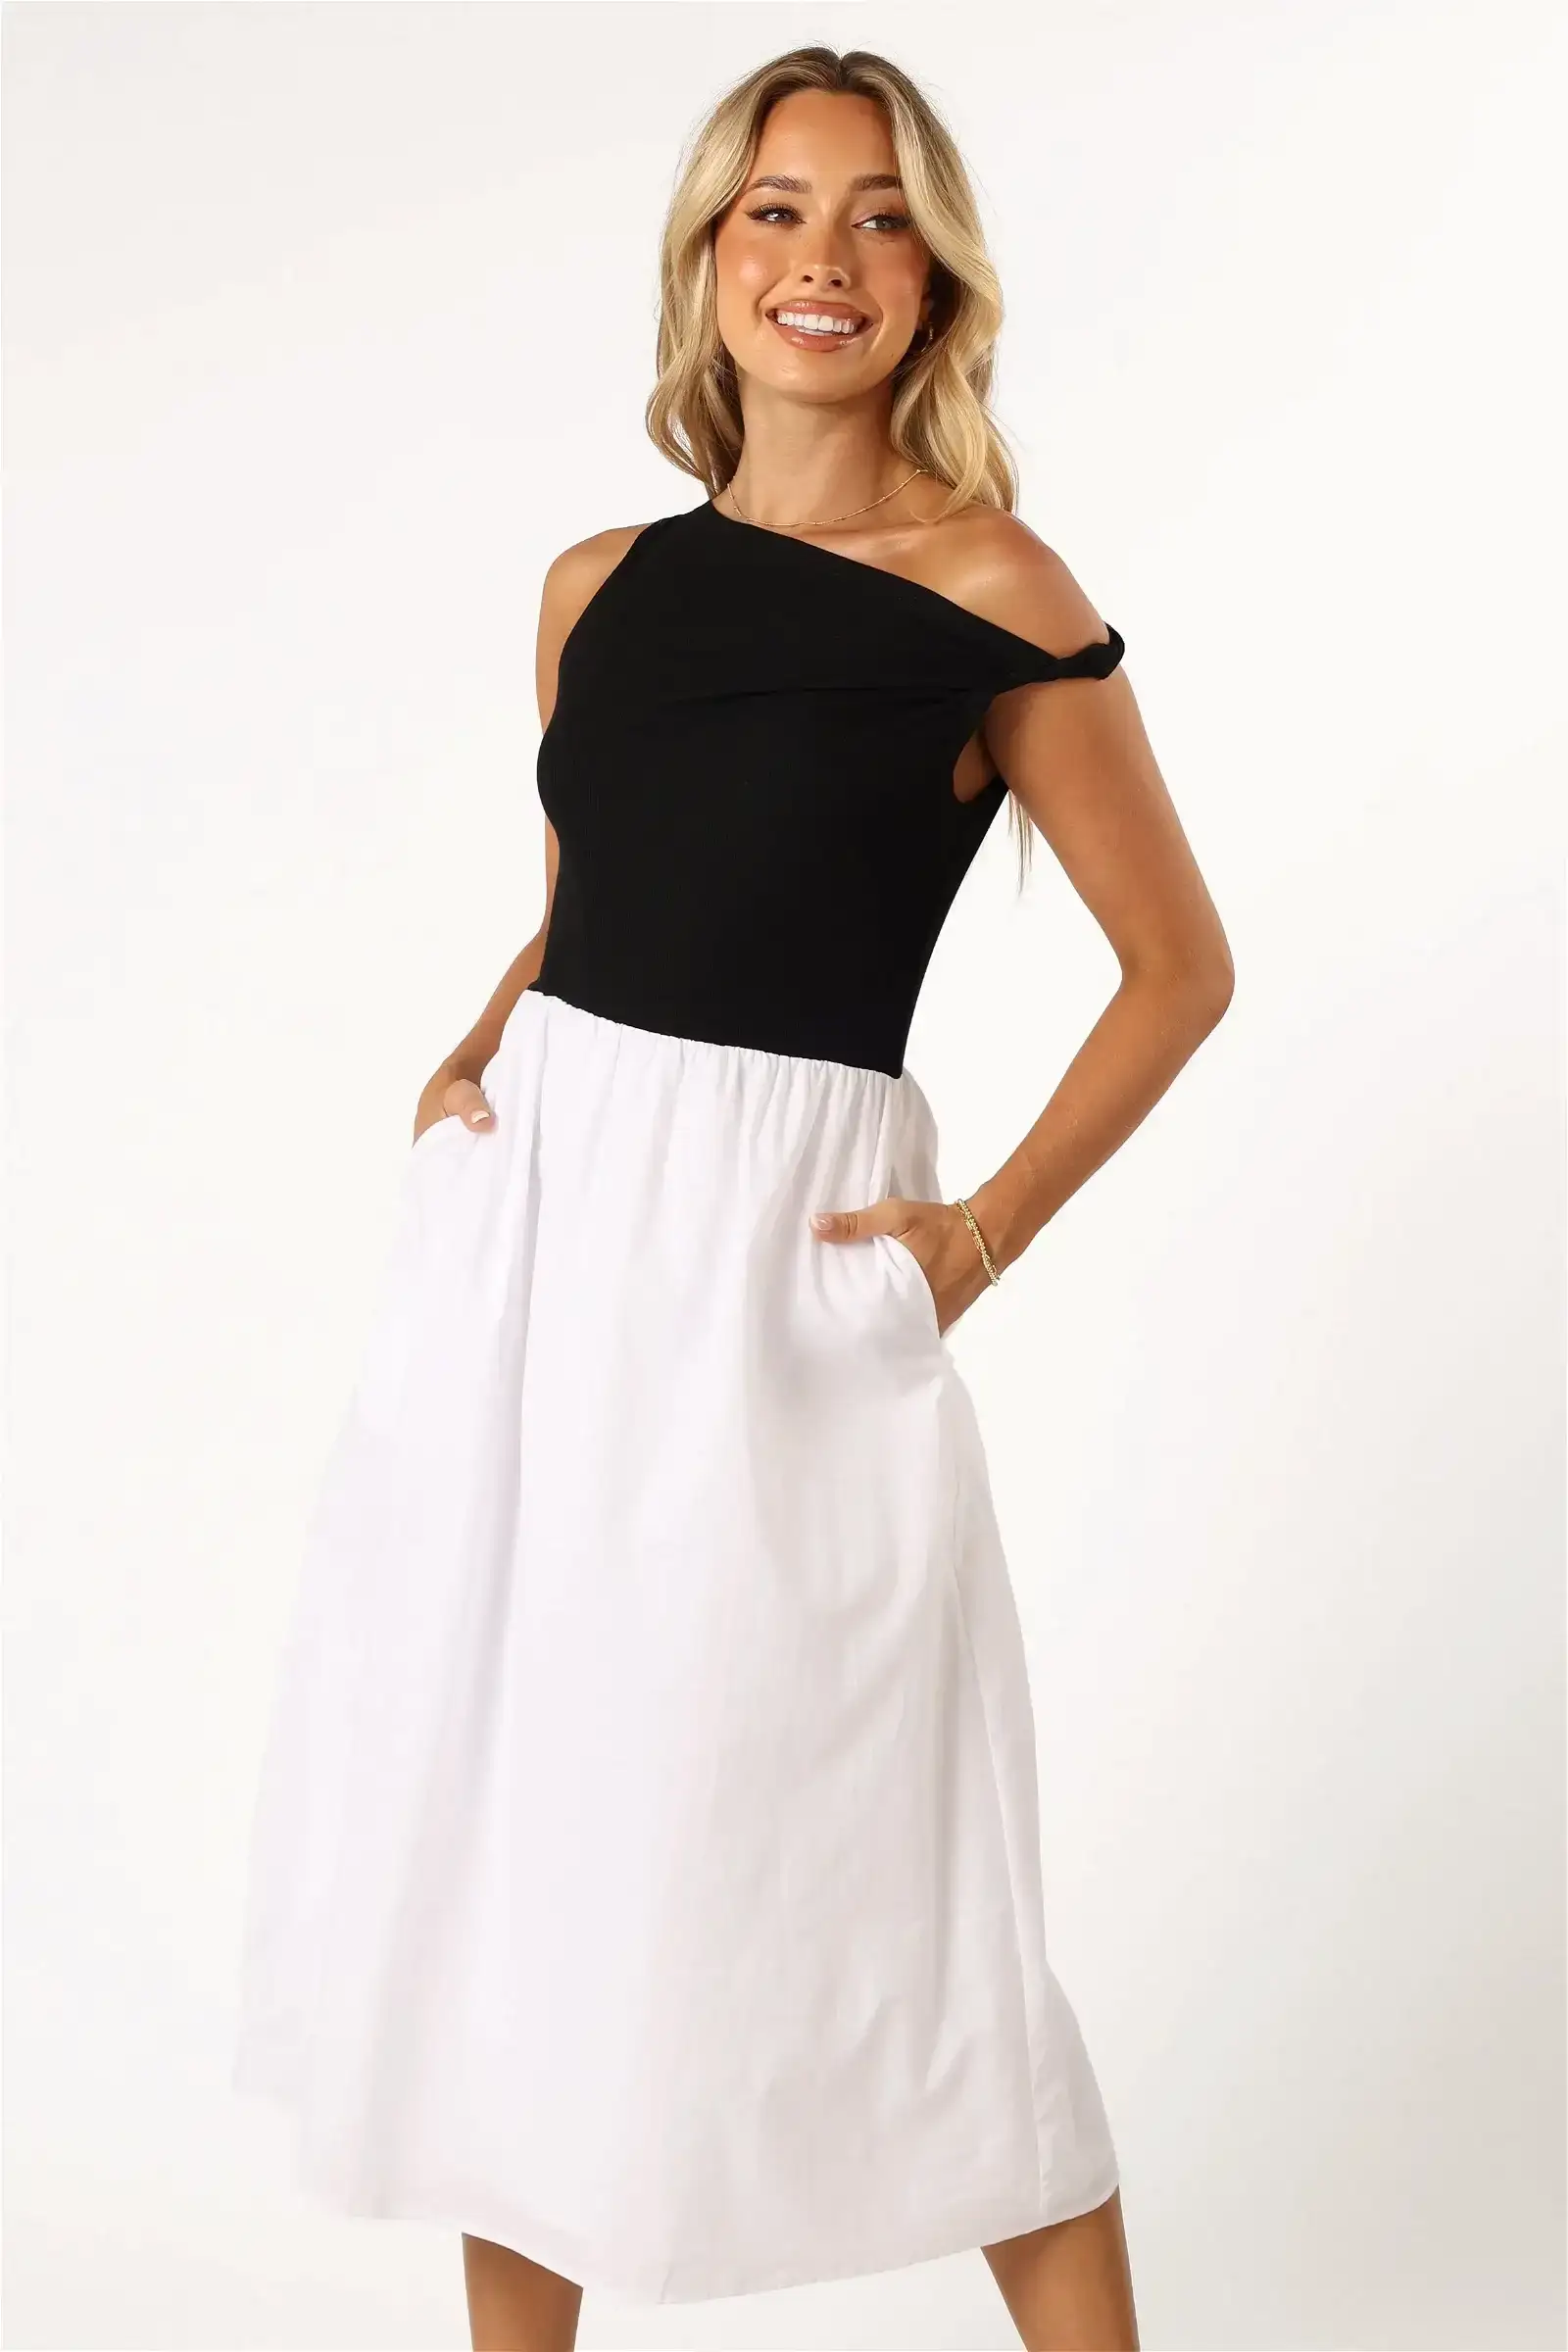 Image of Judson Midi Dress - White/Black